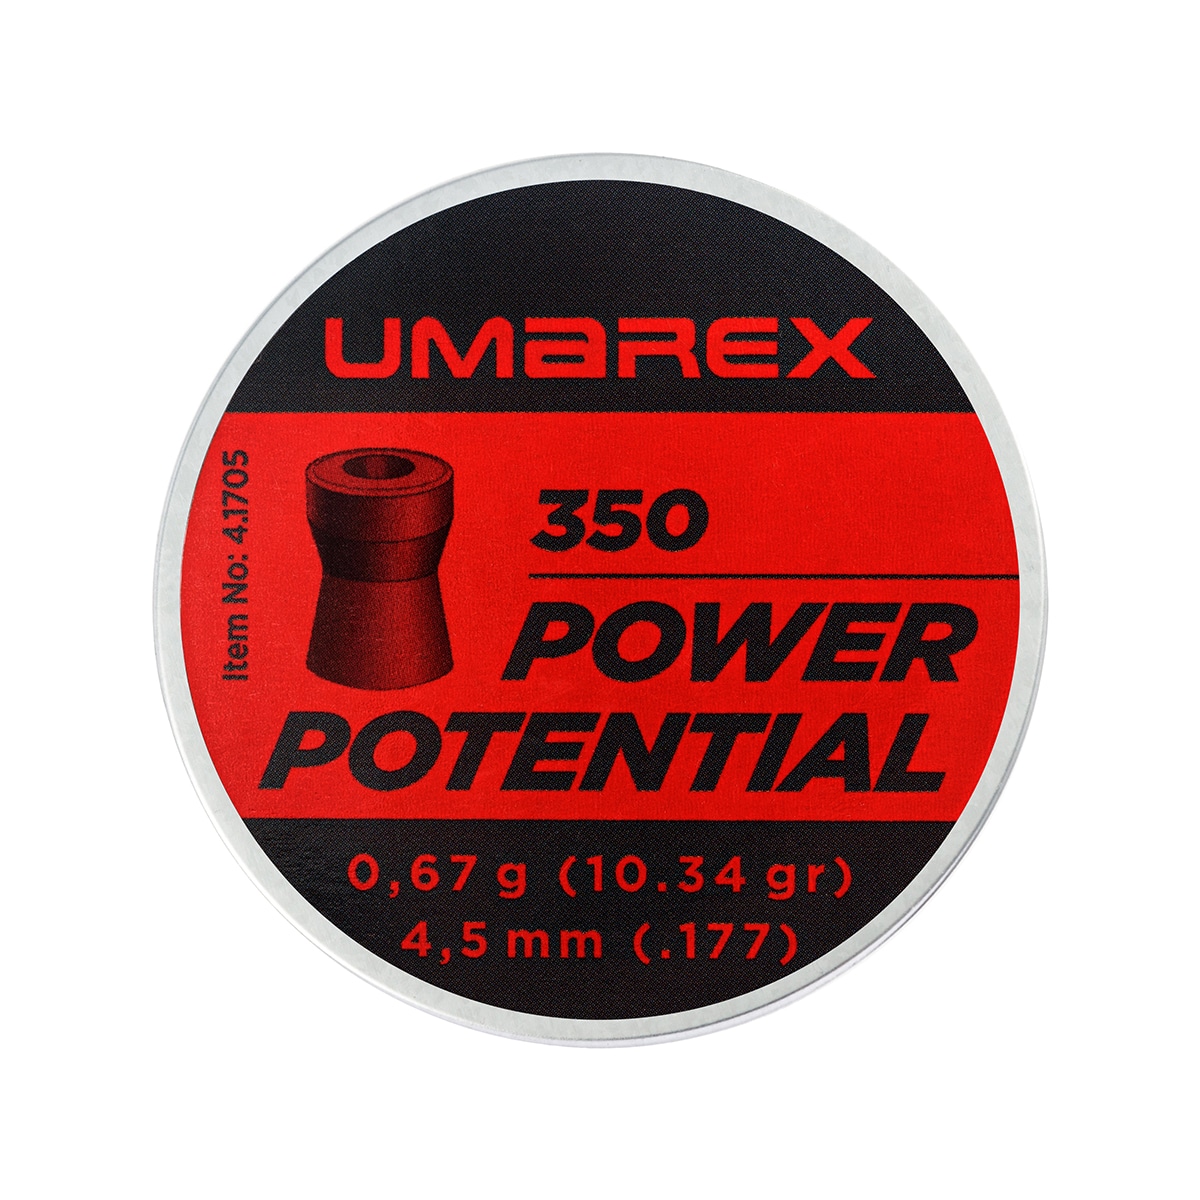 Рушниця Umarex Power Potential 4,5 мм 350.